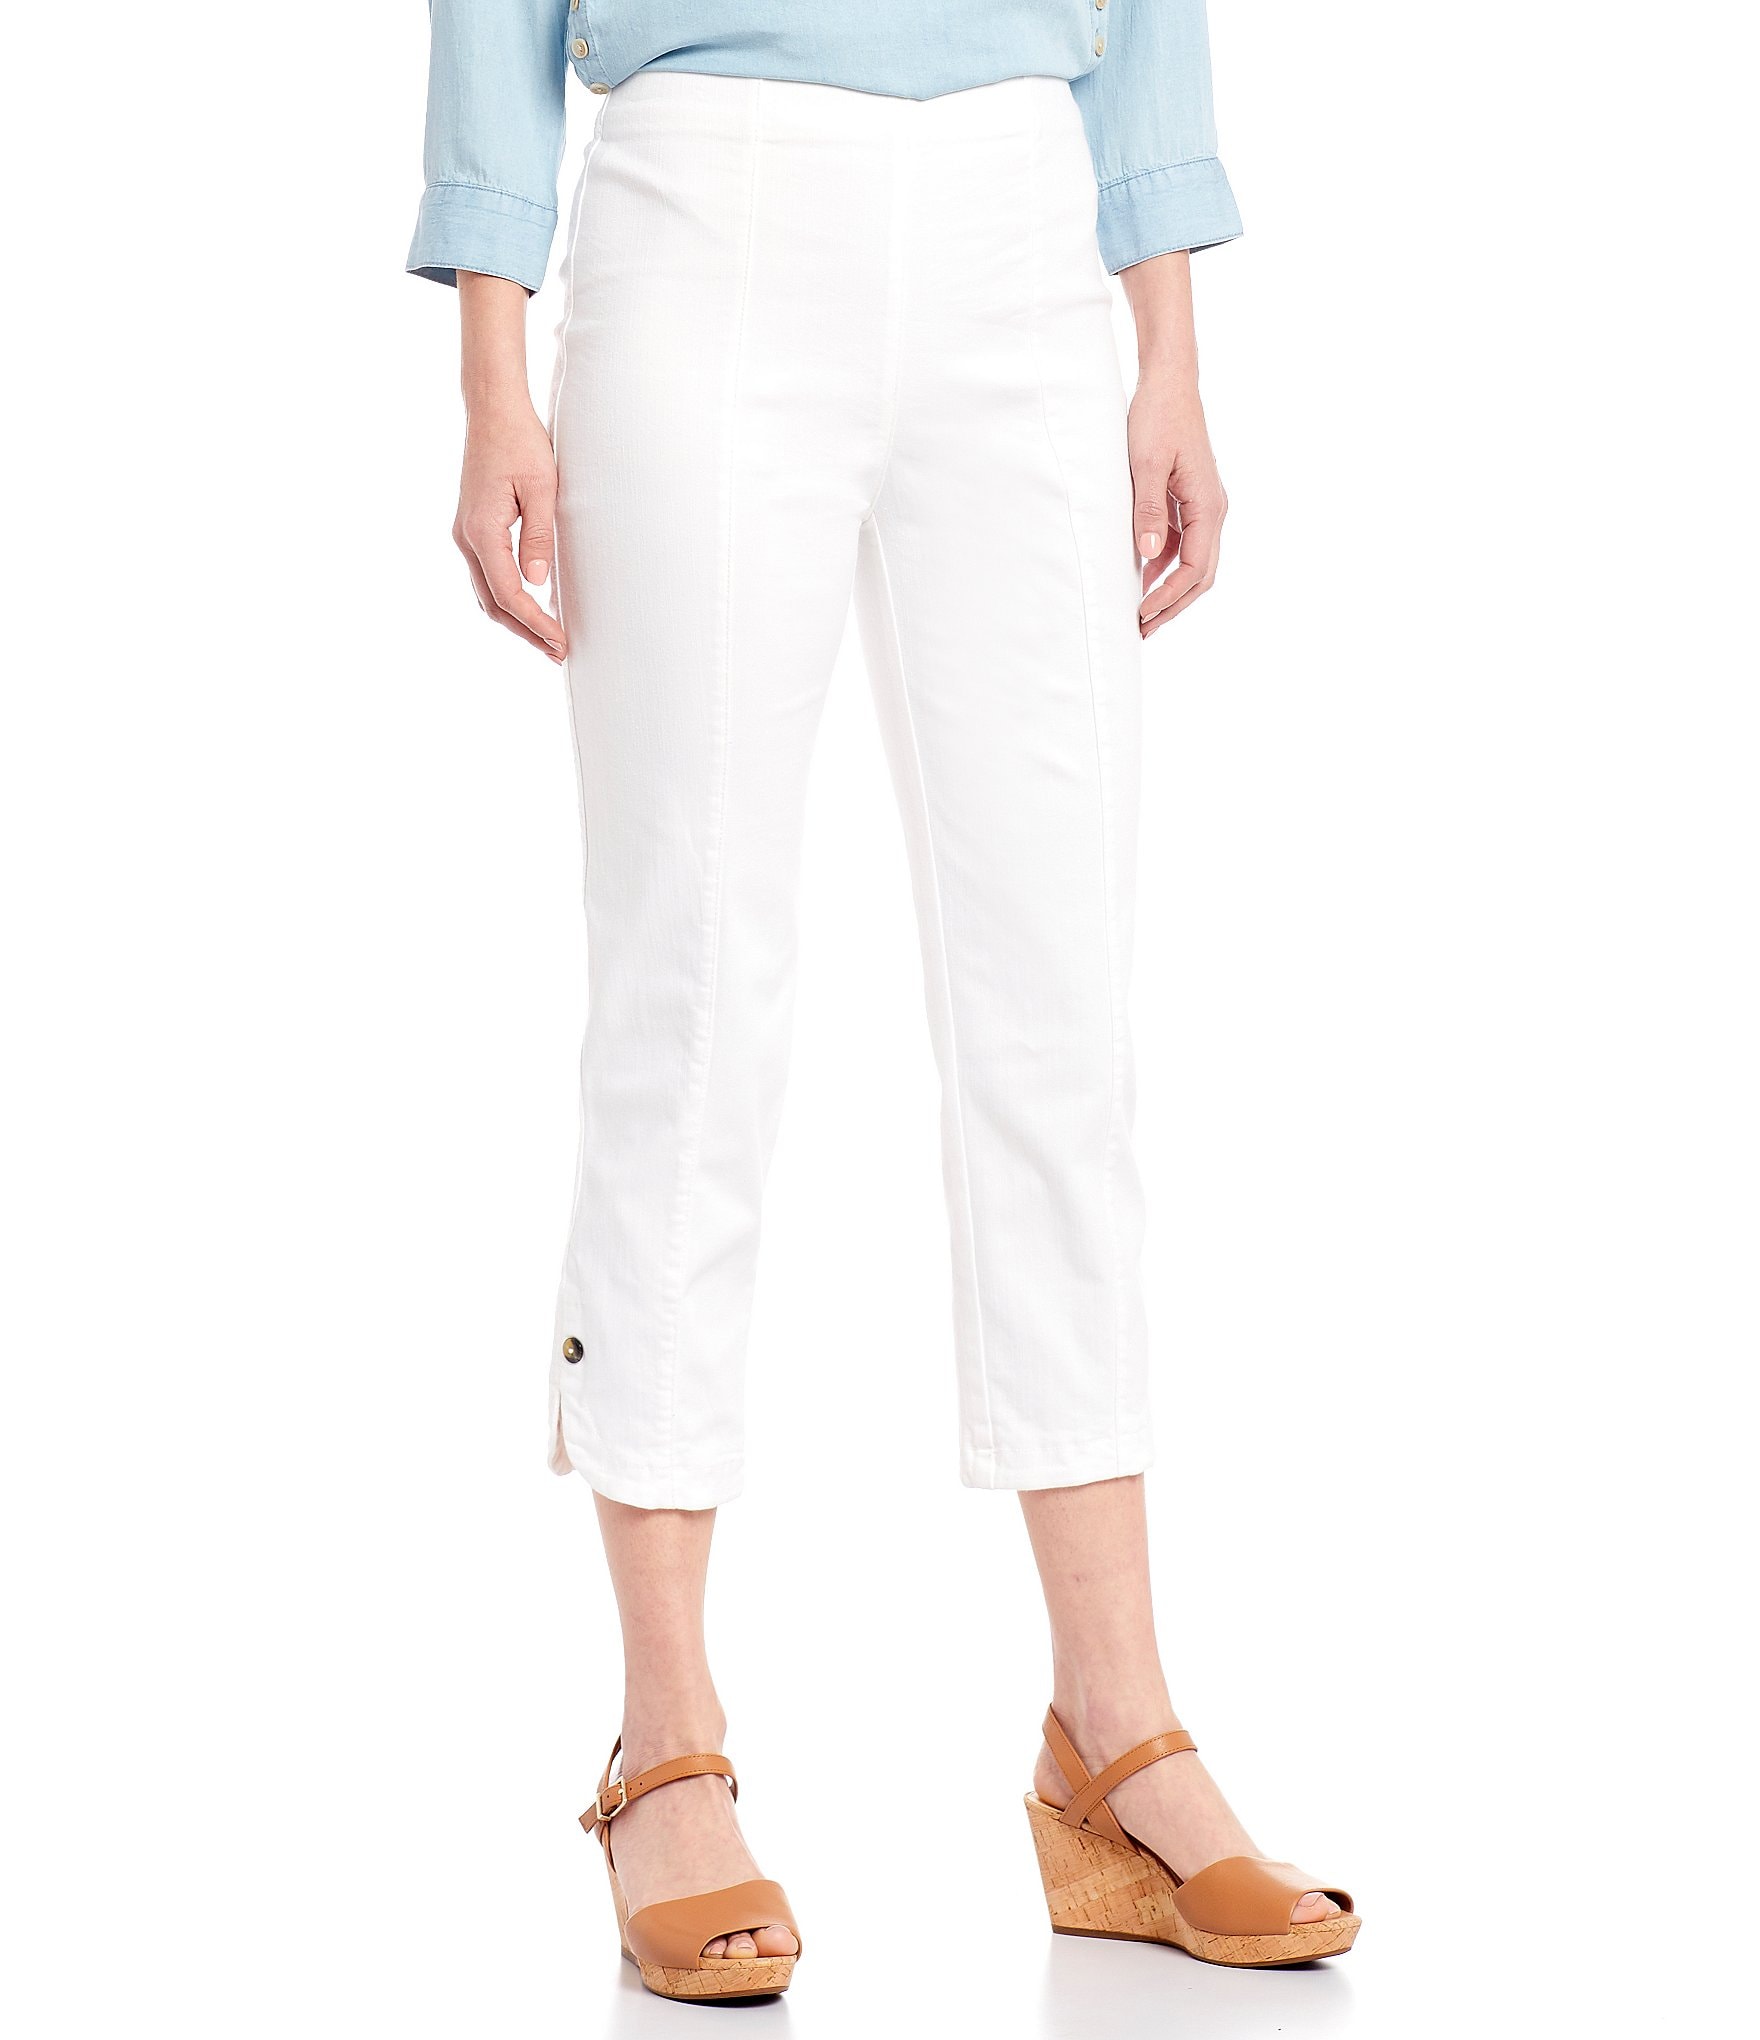 white pants: Women's Petite Clothing